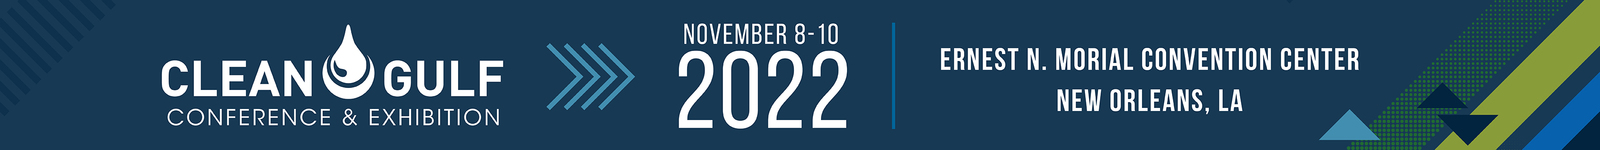 Clean Gulf 2022 logo